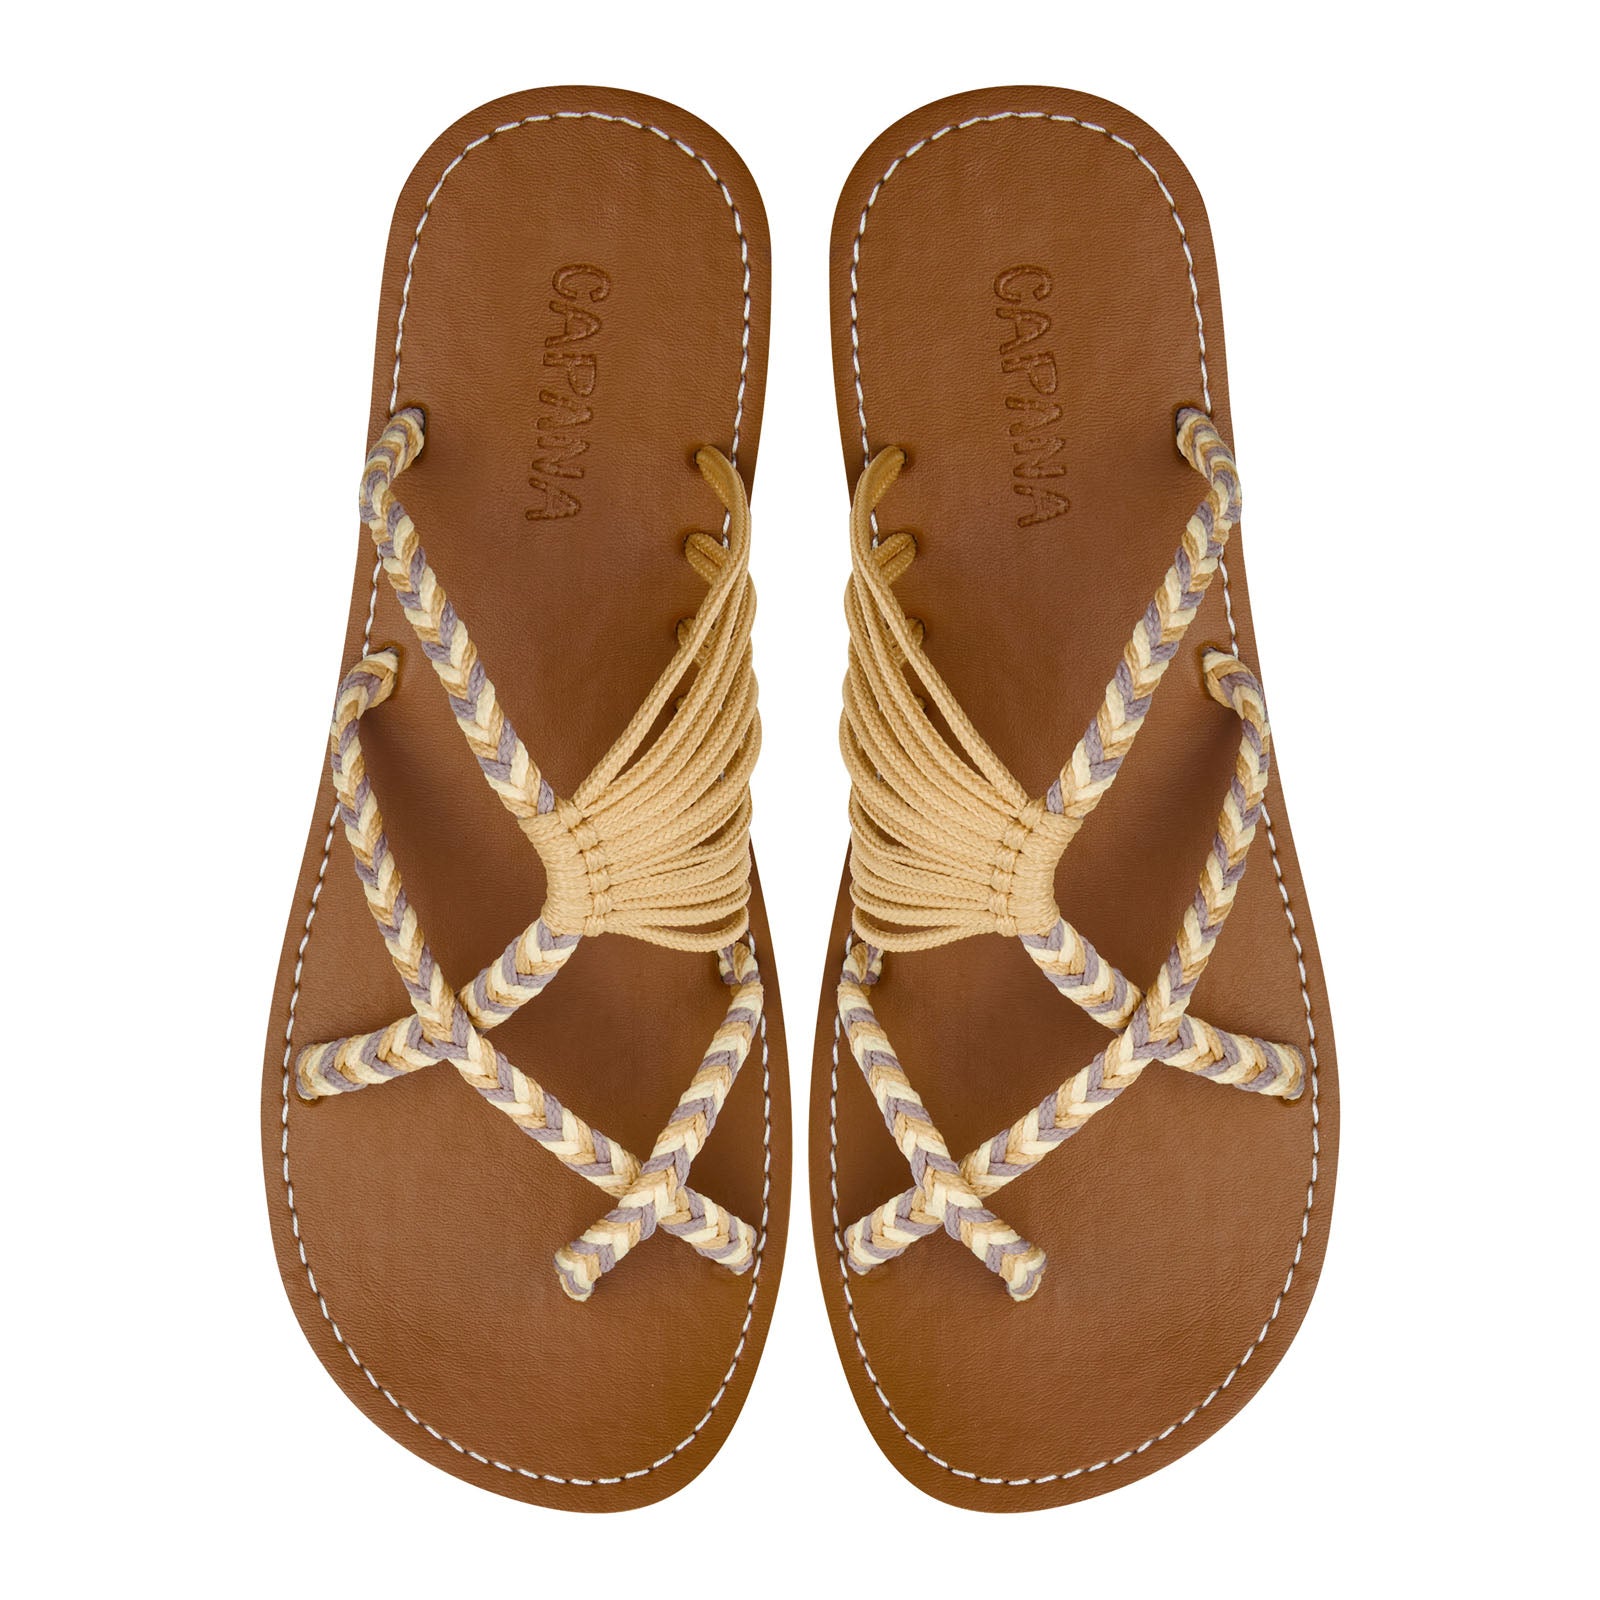 Oceanbliss Sahara Rope Sandals Sands Crisscross design Flat Handmade sandals for women